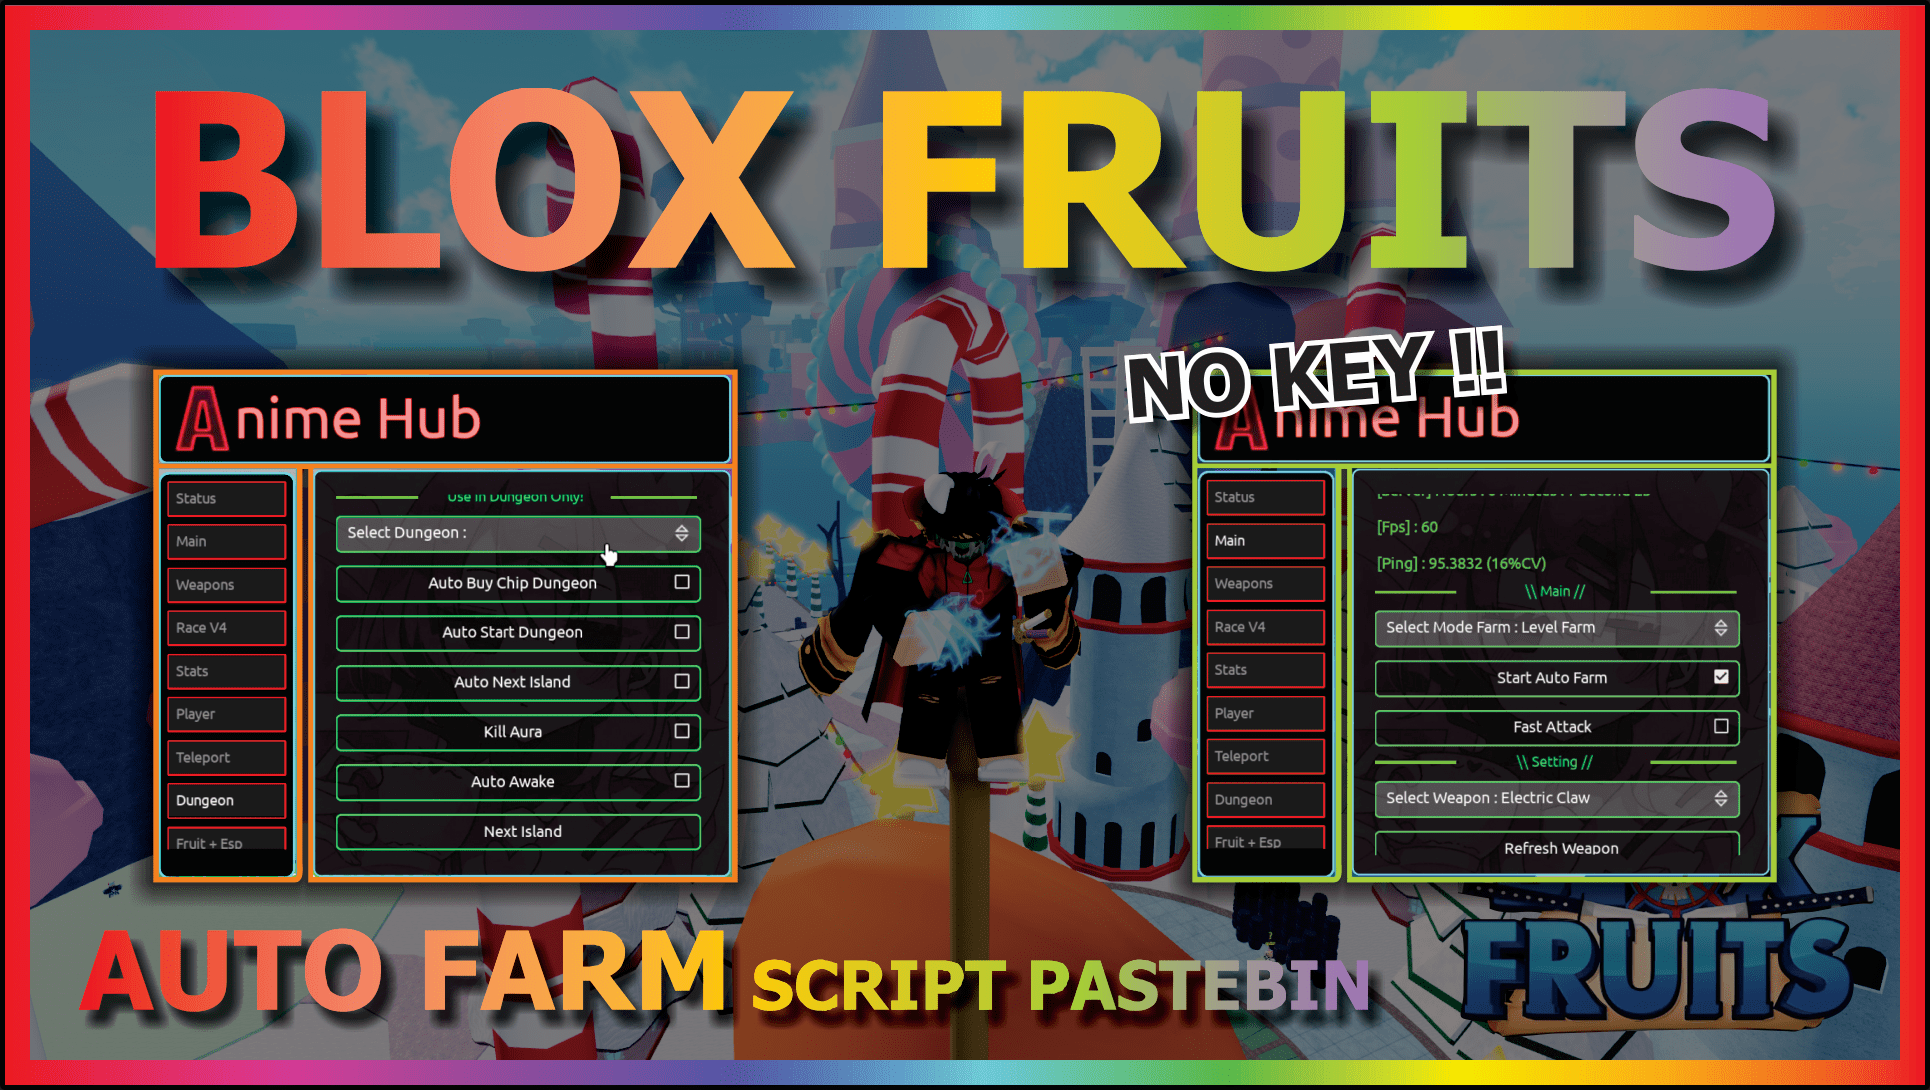 Best Raito Hub Script Blox Fruit - Auto Race V4 (2023)